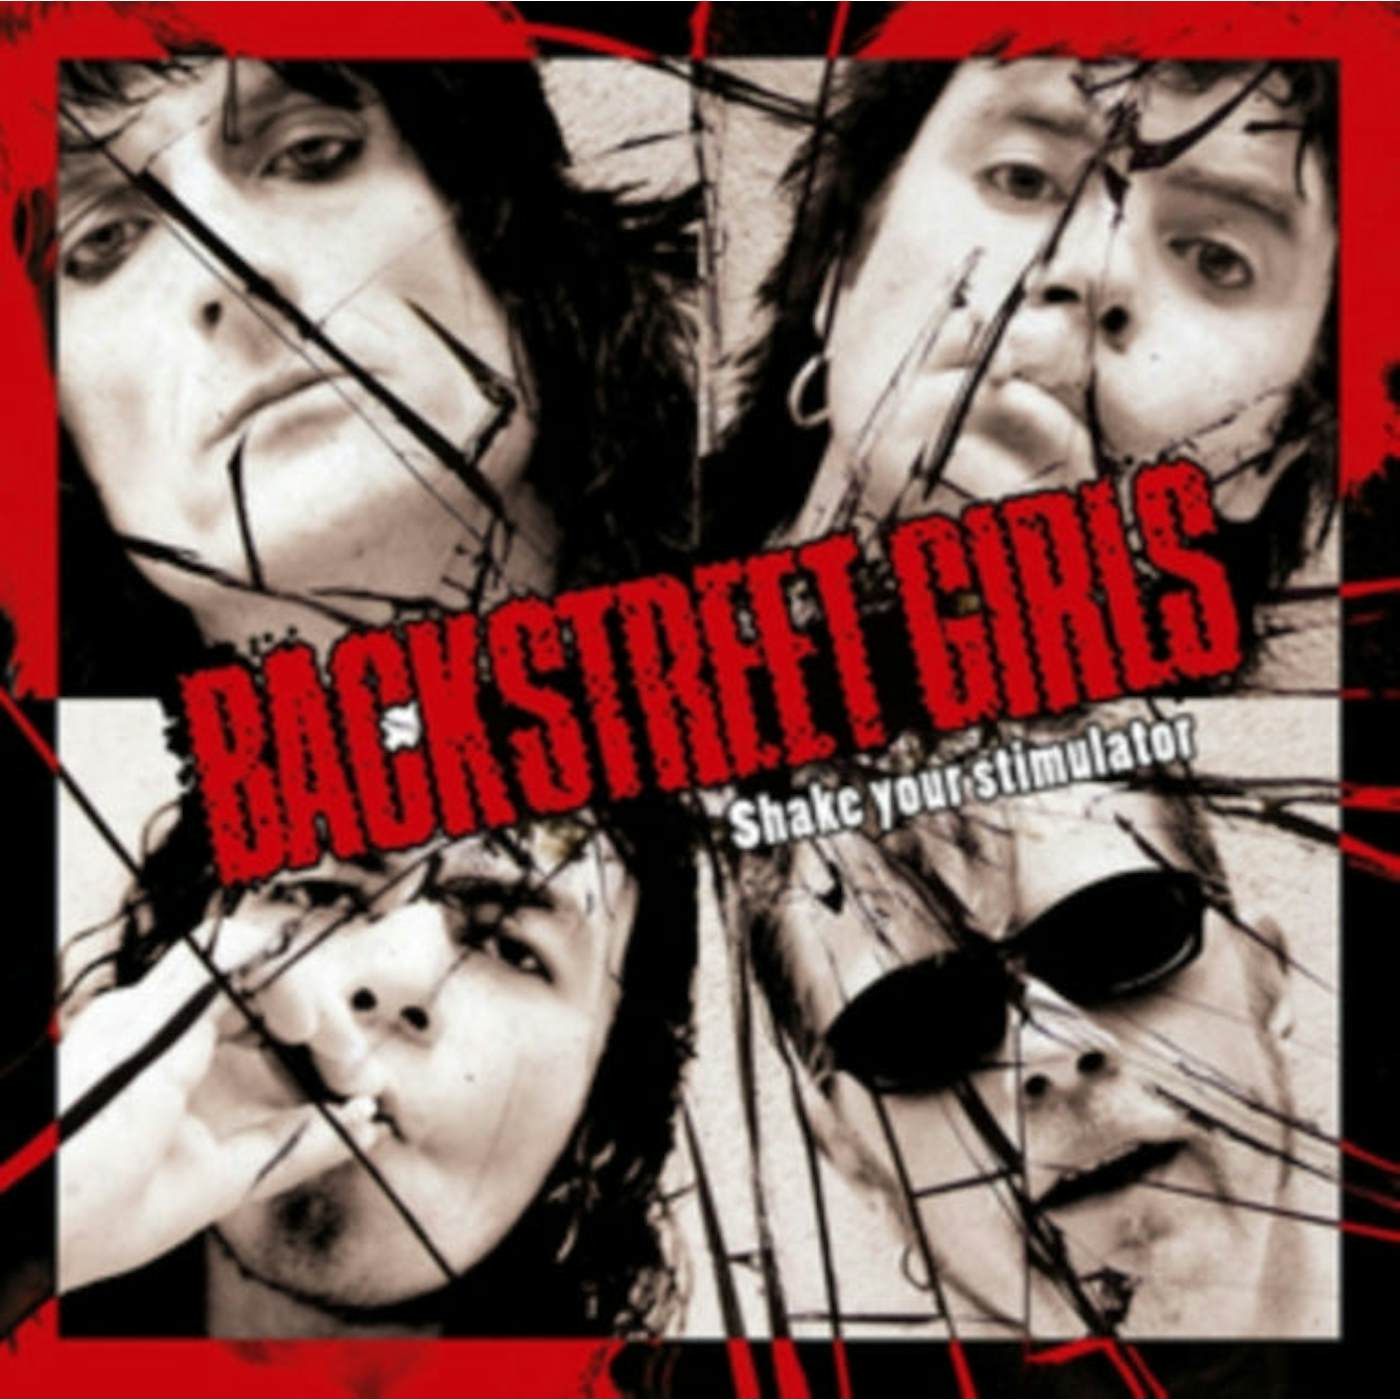 Backstreet Girls CD - Shake Your Stimulator